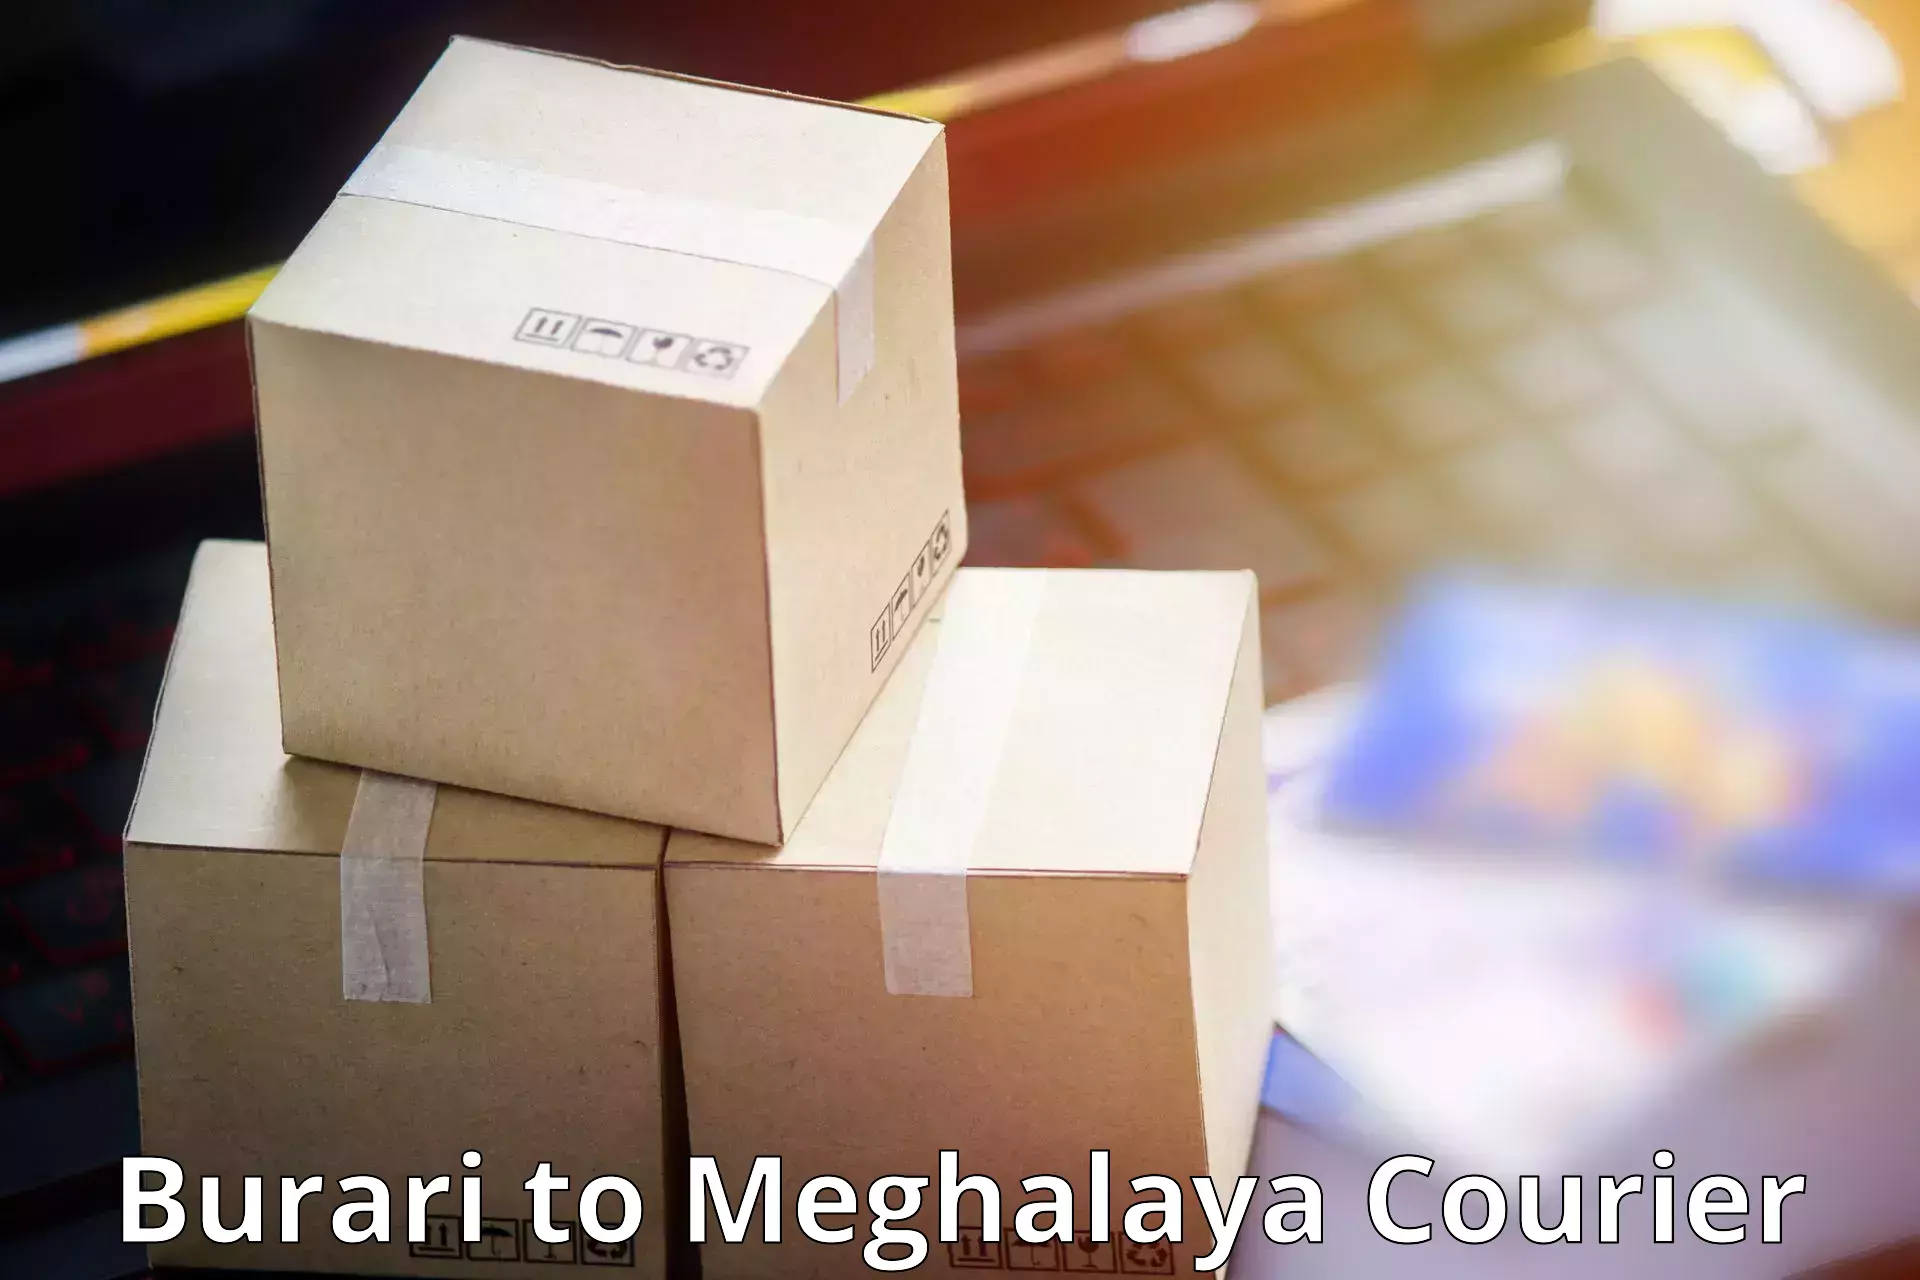 International parcel service Burari to Meghalaya